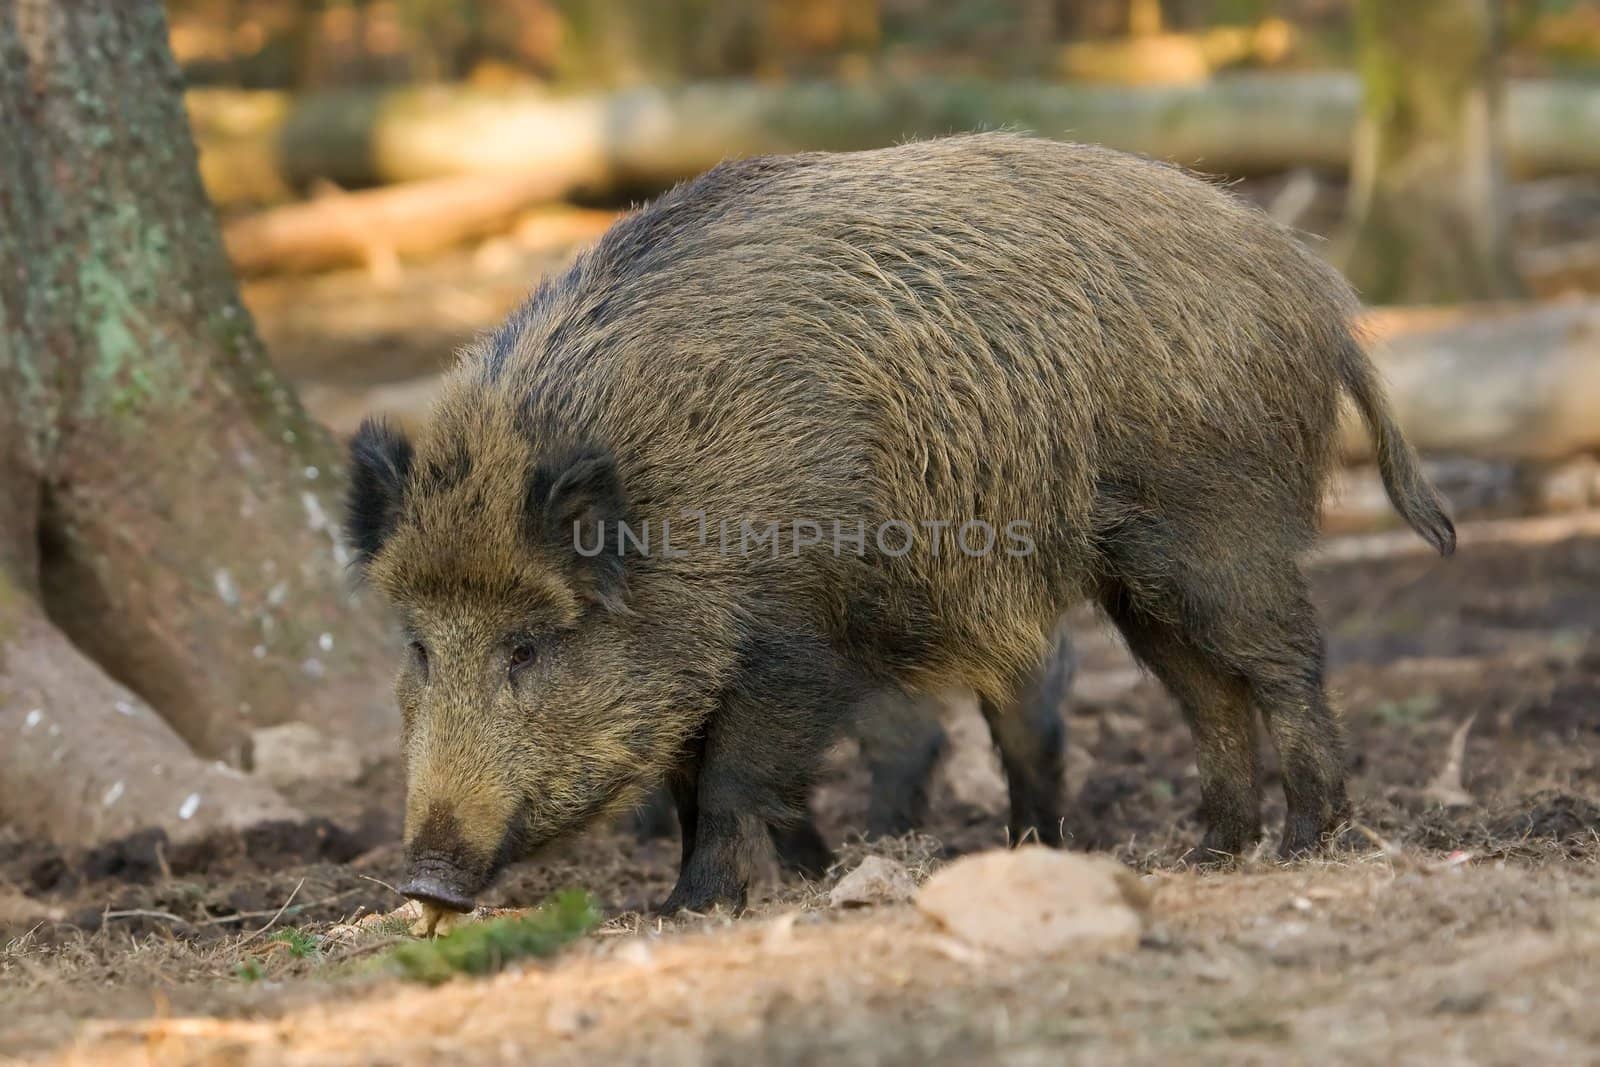 Wild boar by camerziga